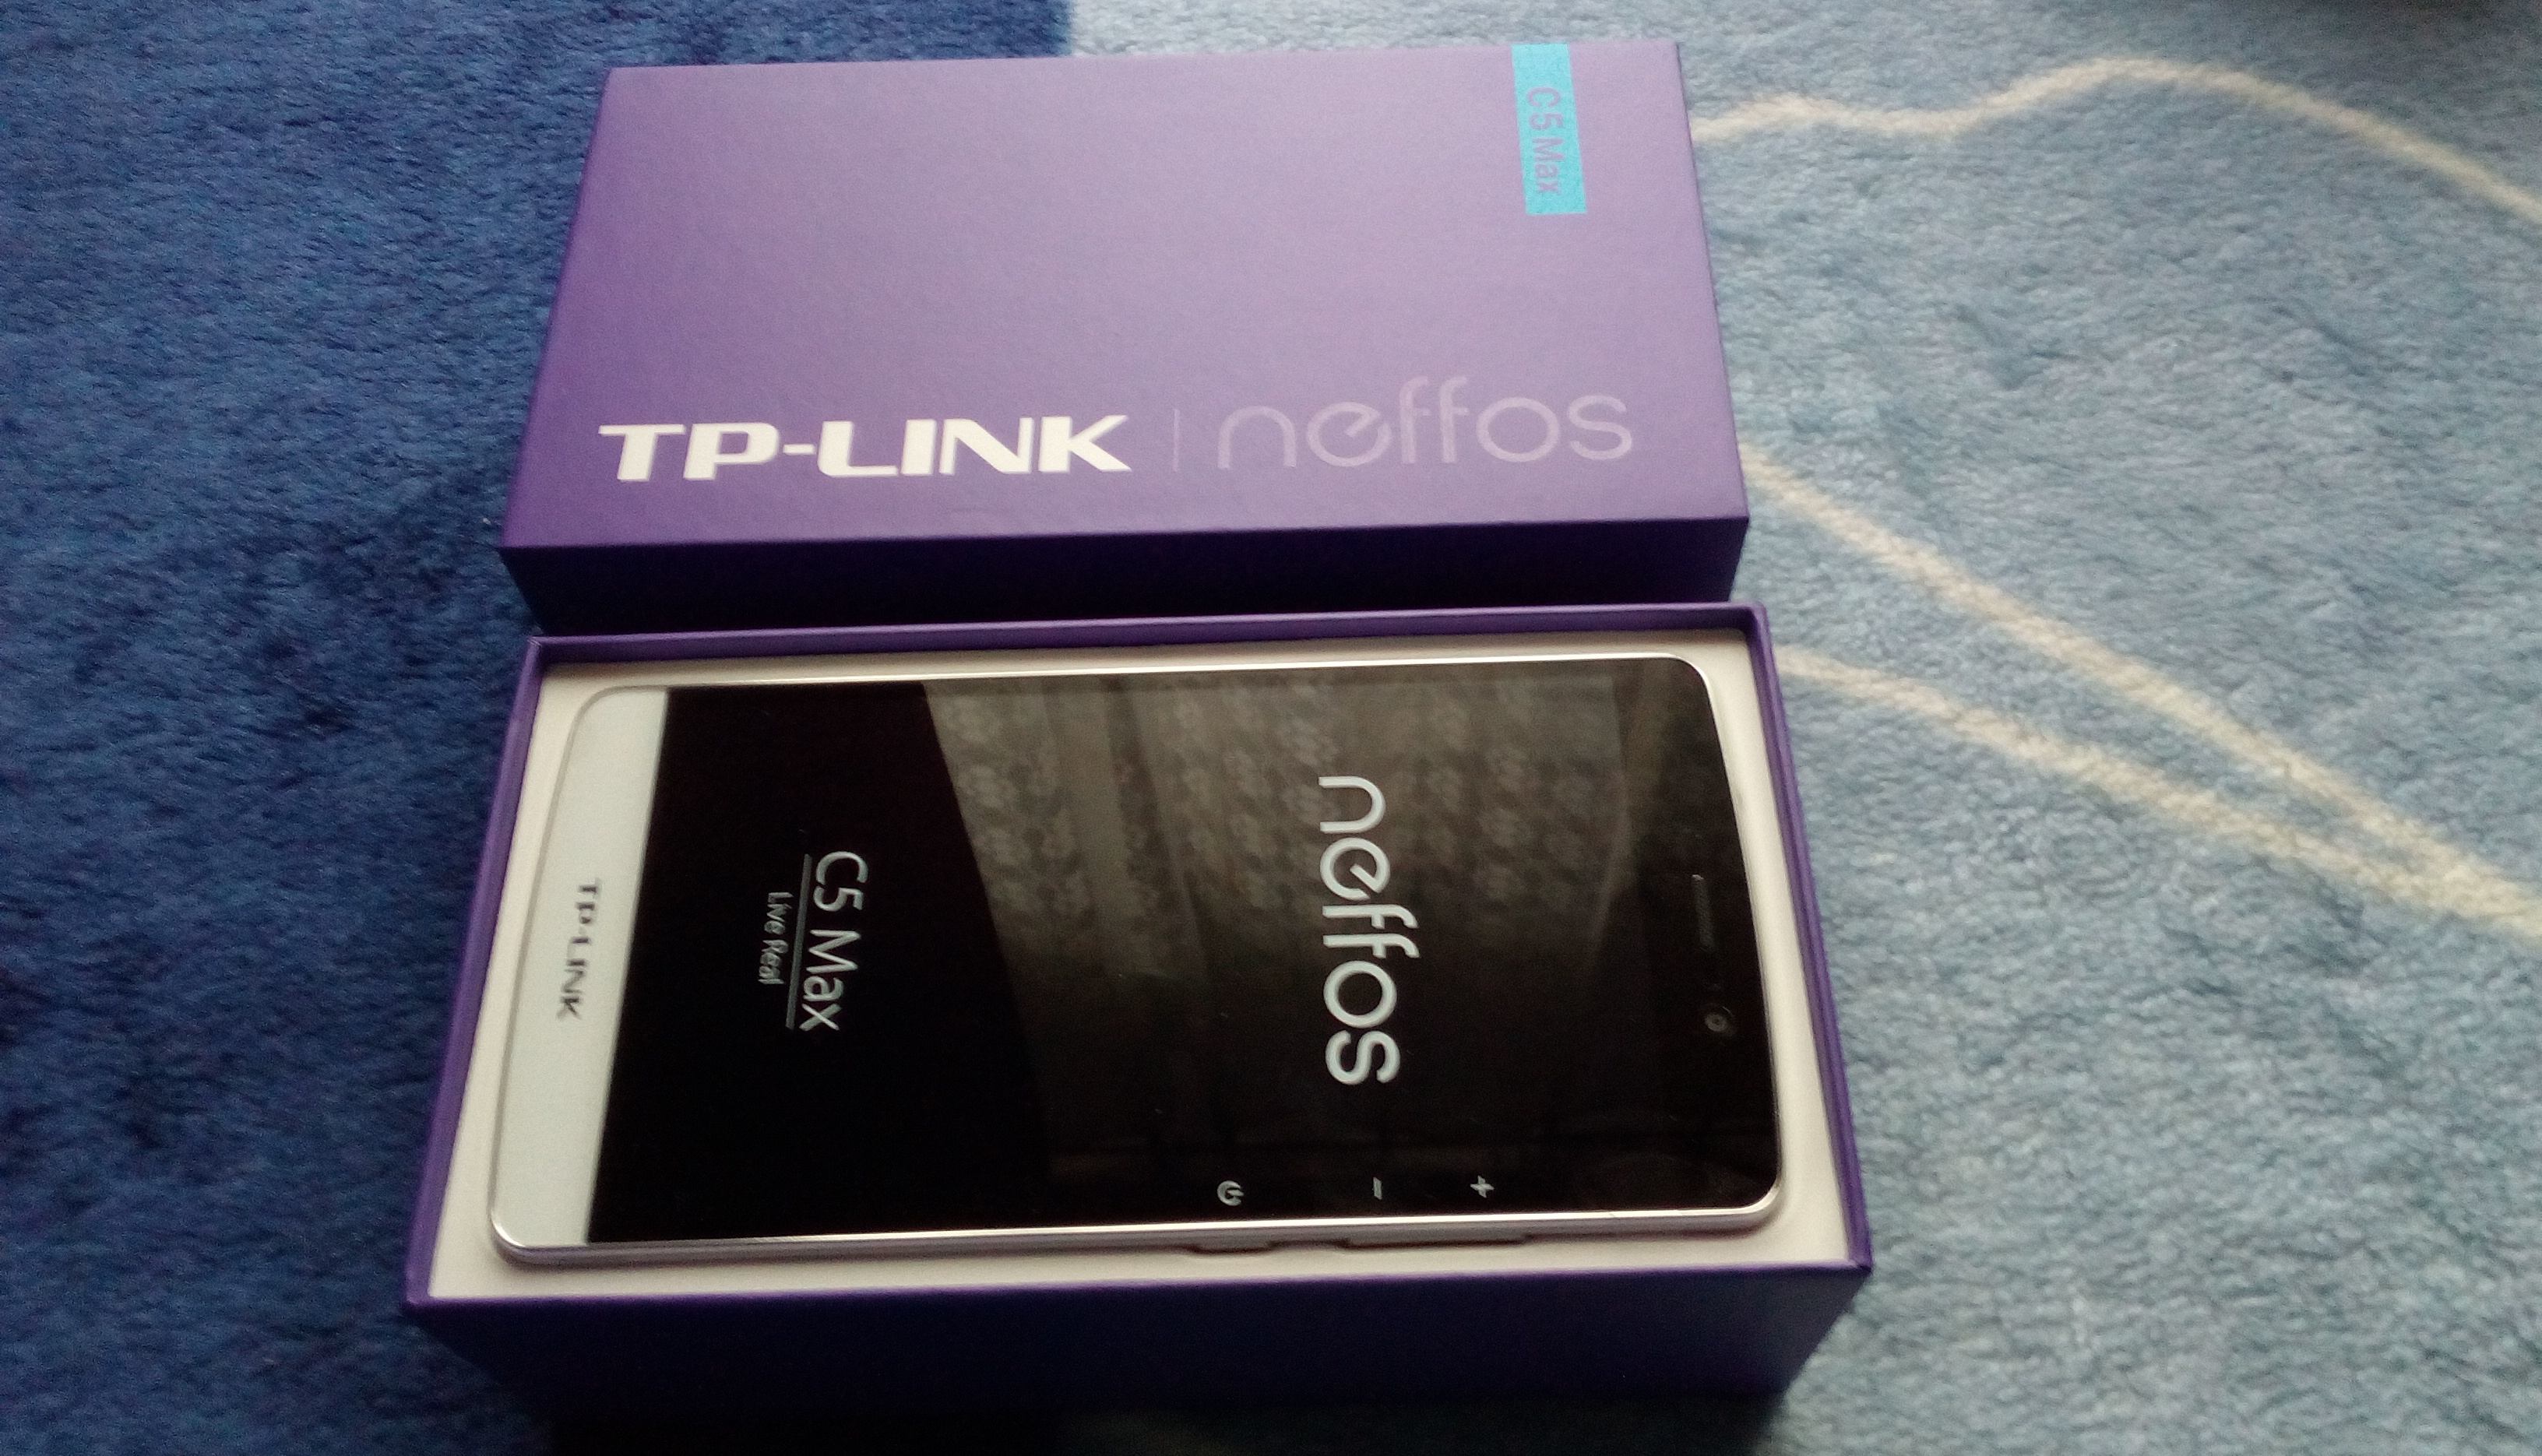 neffos-c5-max-tp-link-smartfon-zawartosc-pudelko